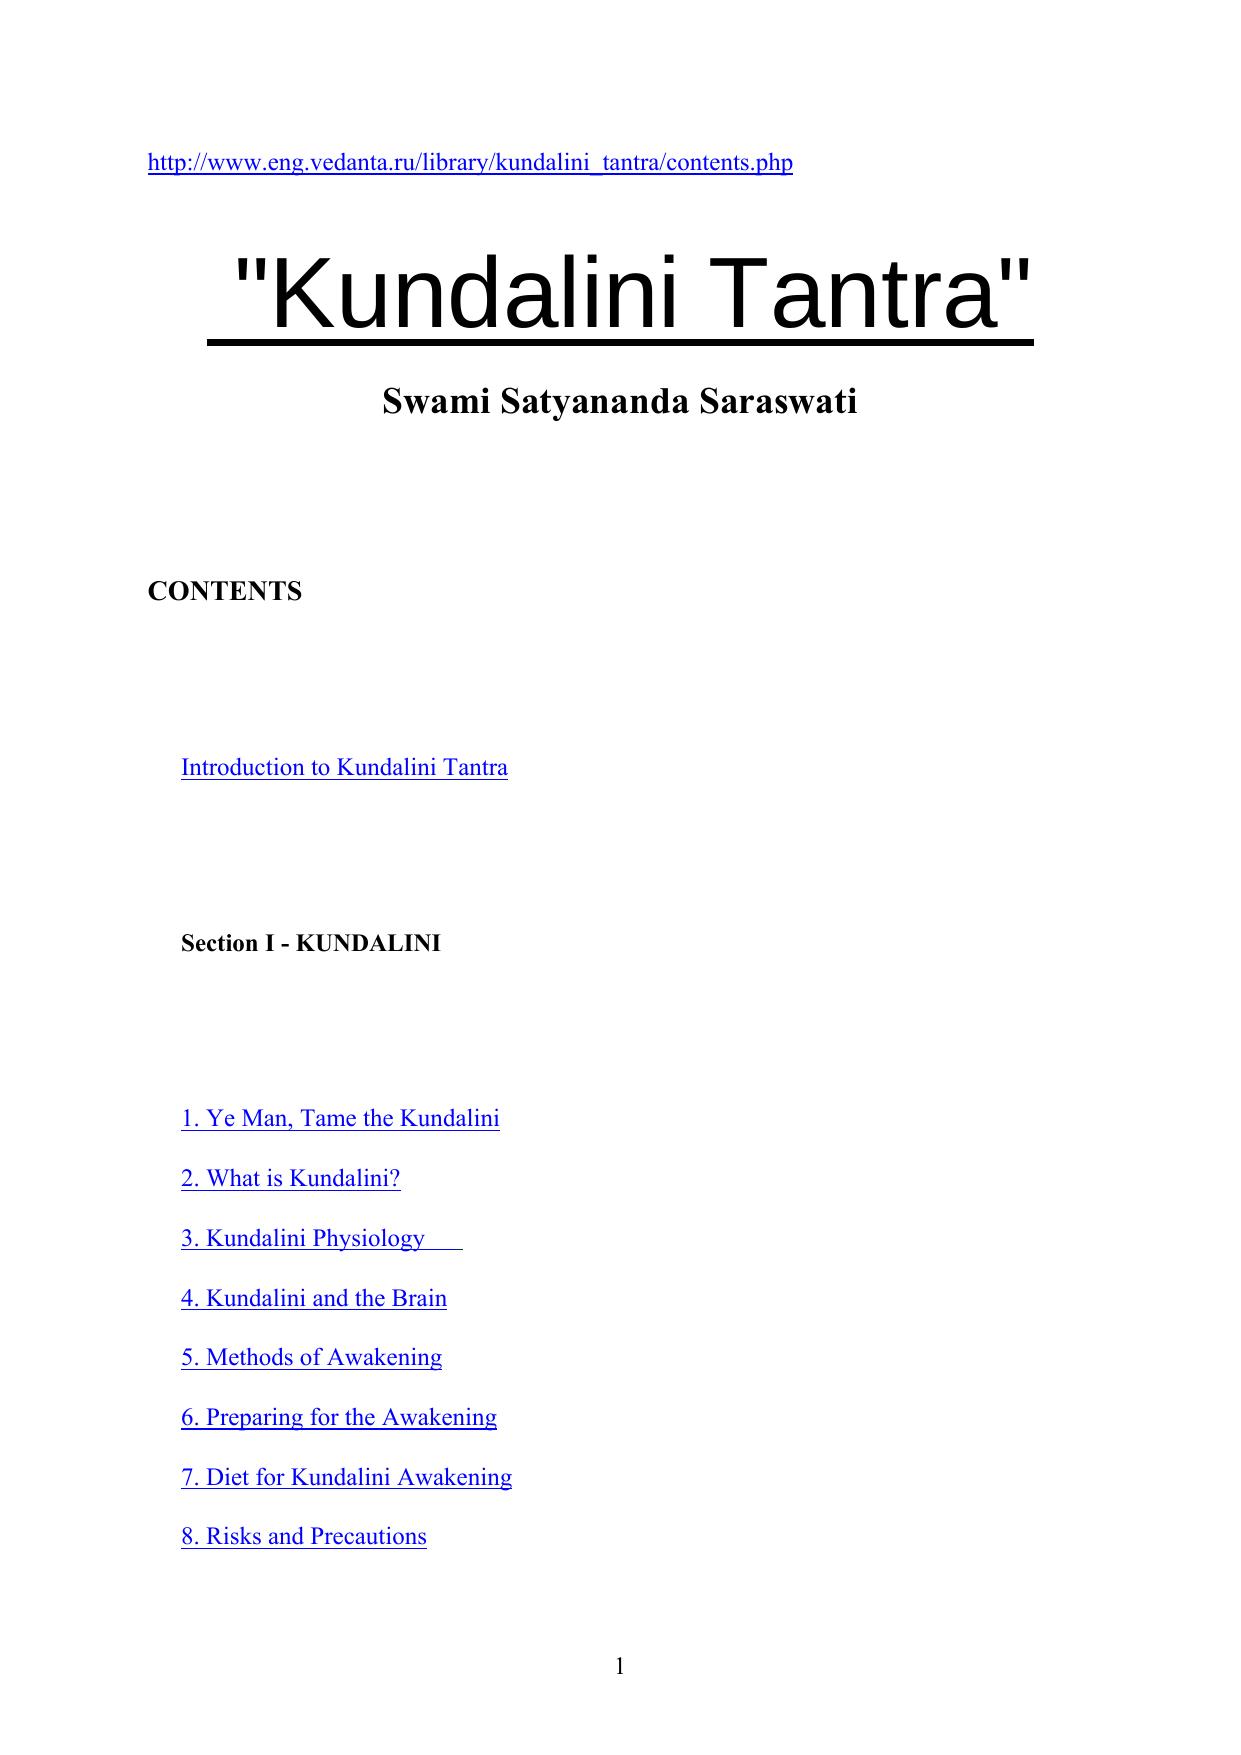 Kundalini Tantra by Swami Satyananda Saraswati